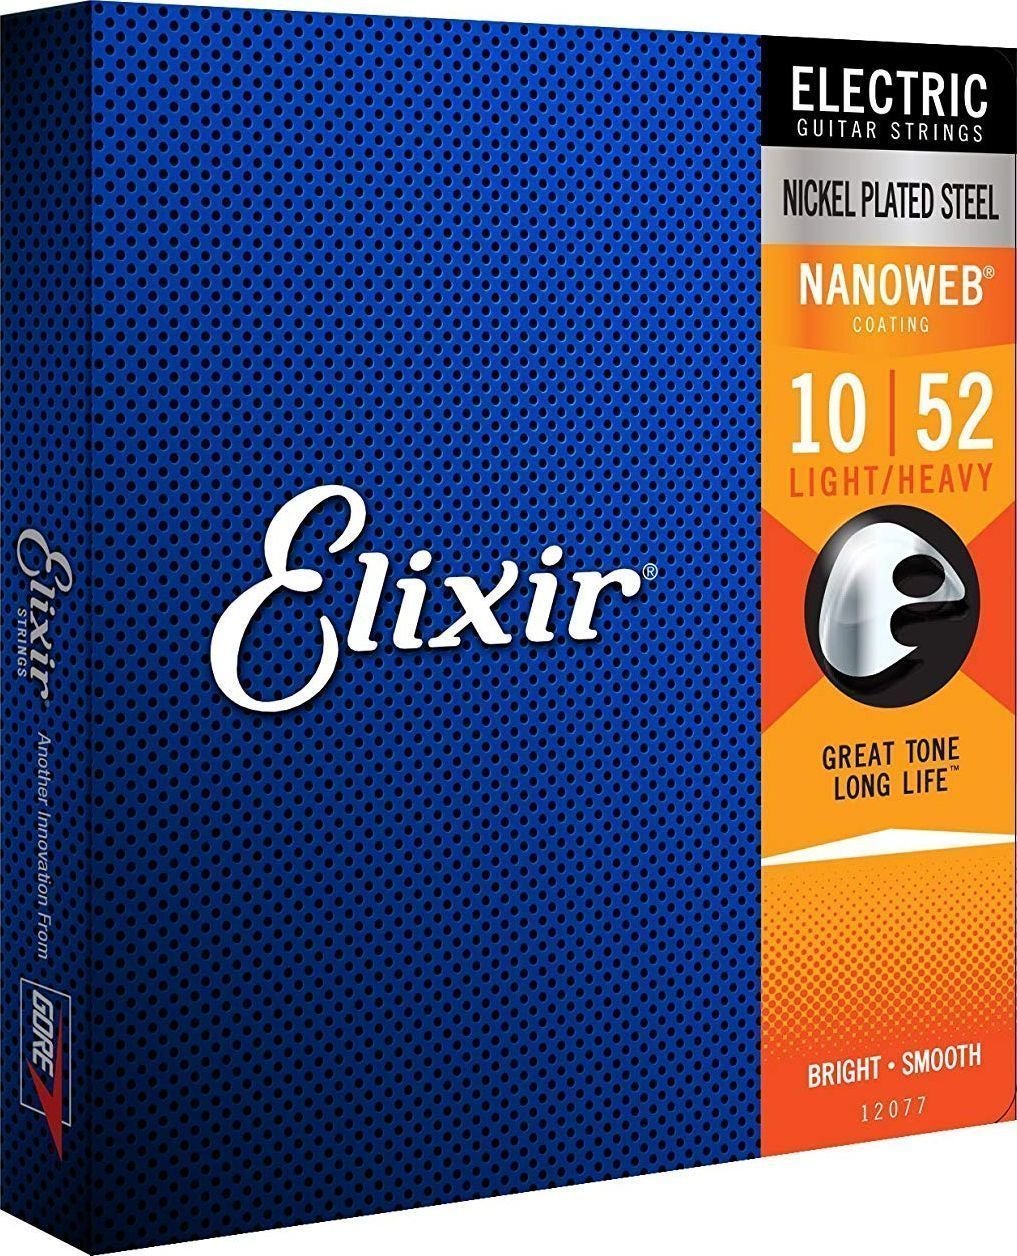 Saiten für E-Gitarre Elixir 12077 Nanoweb 10-52